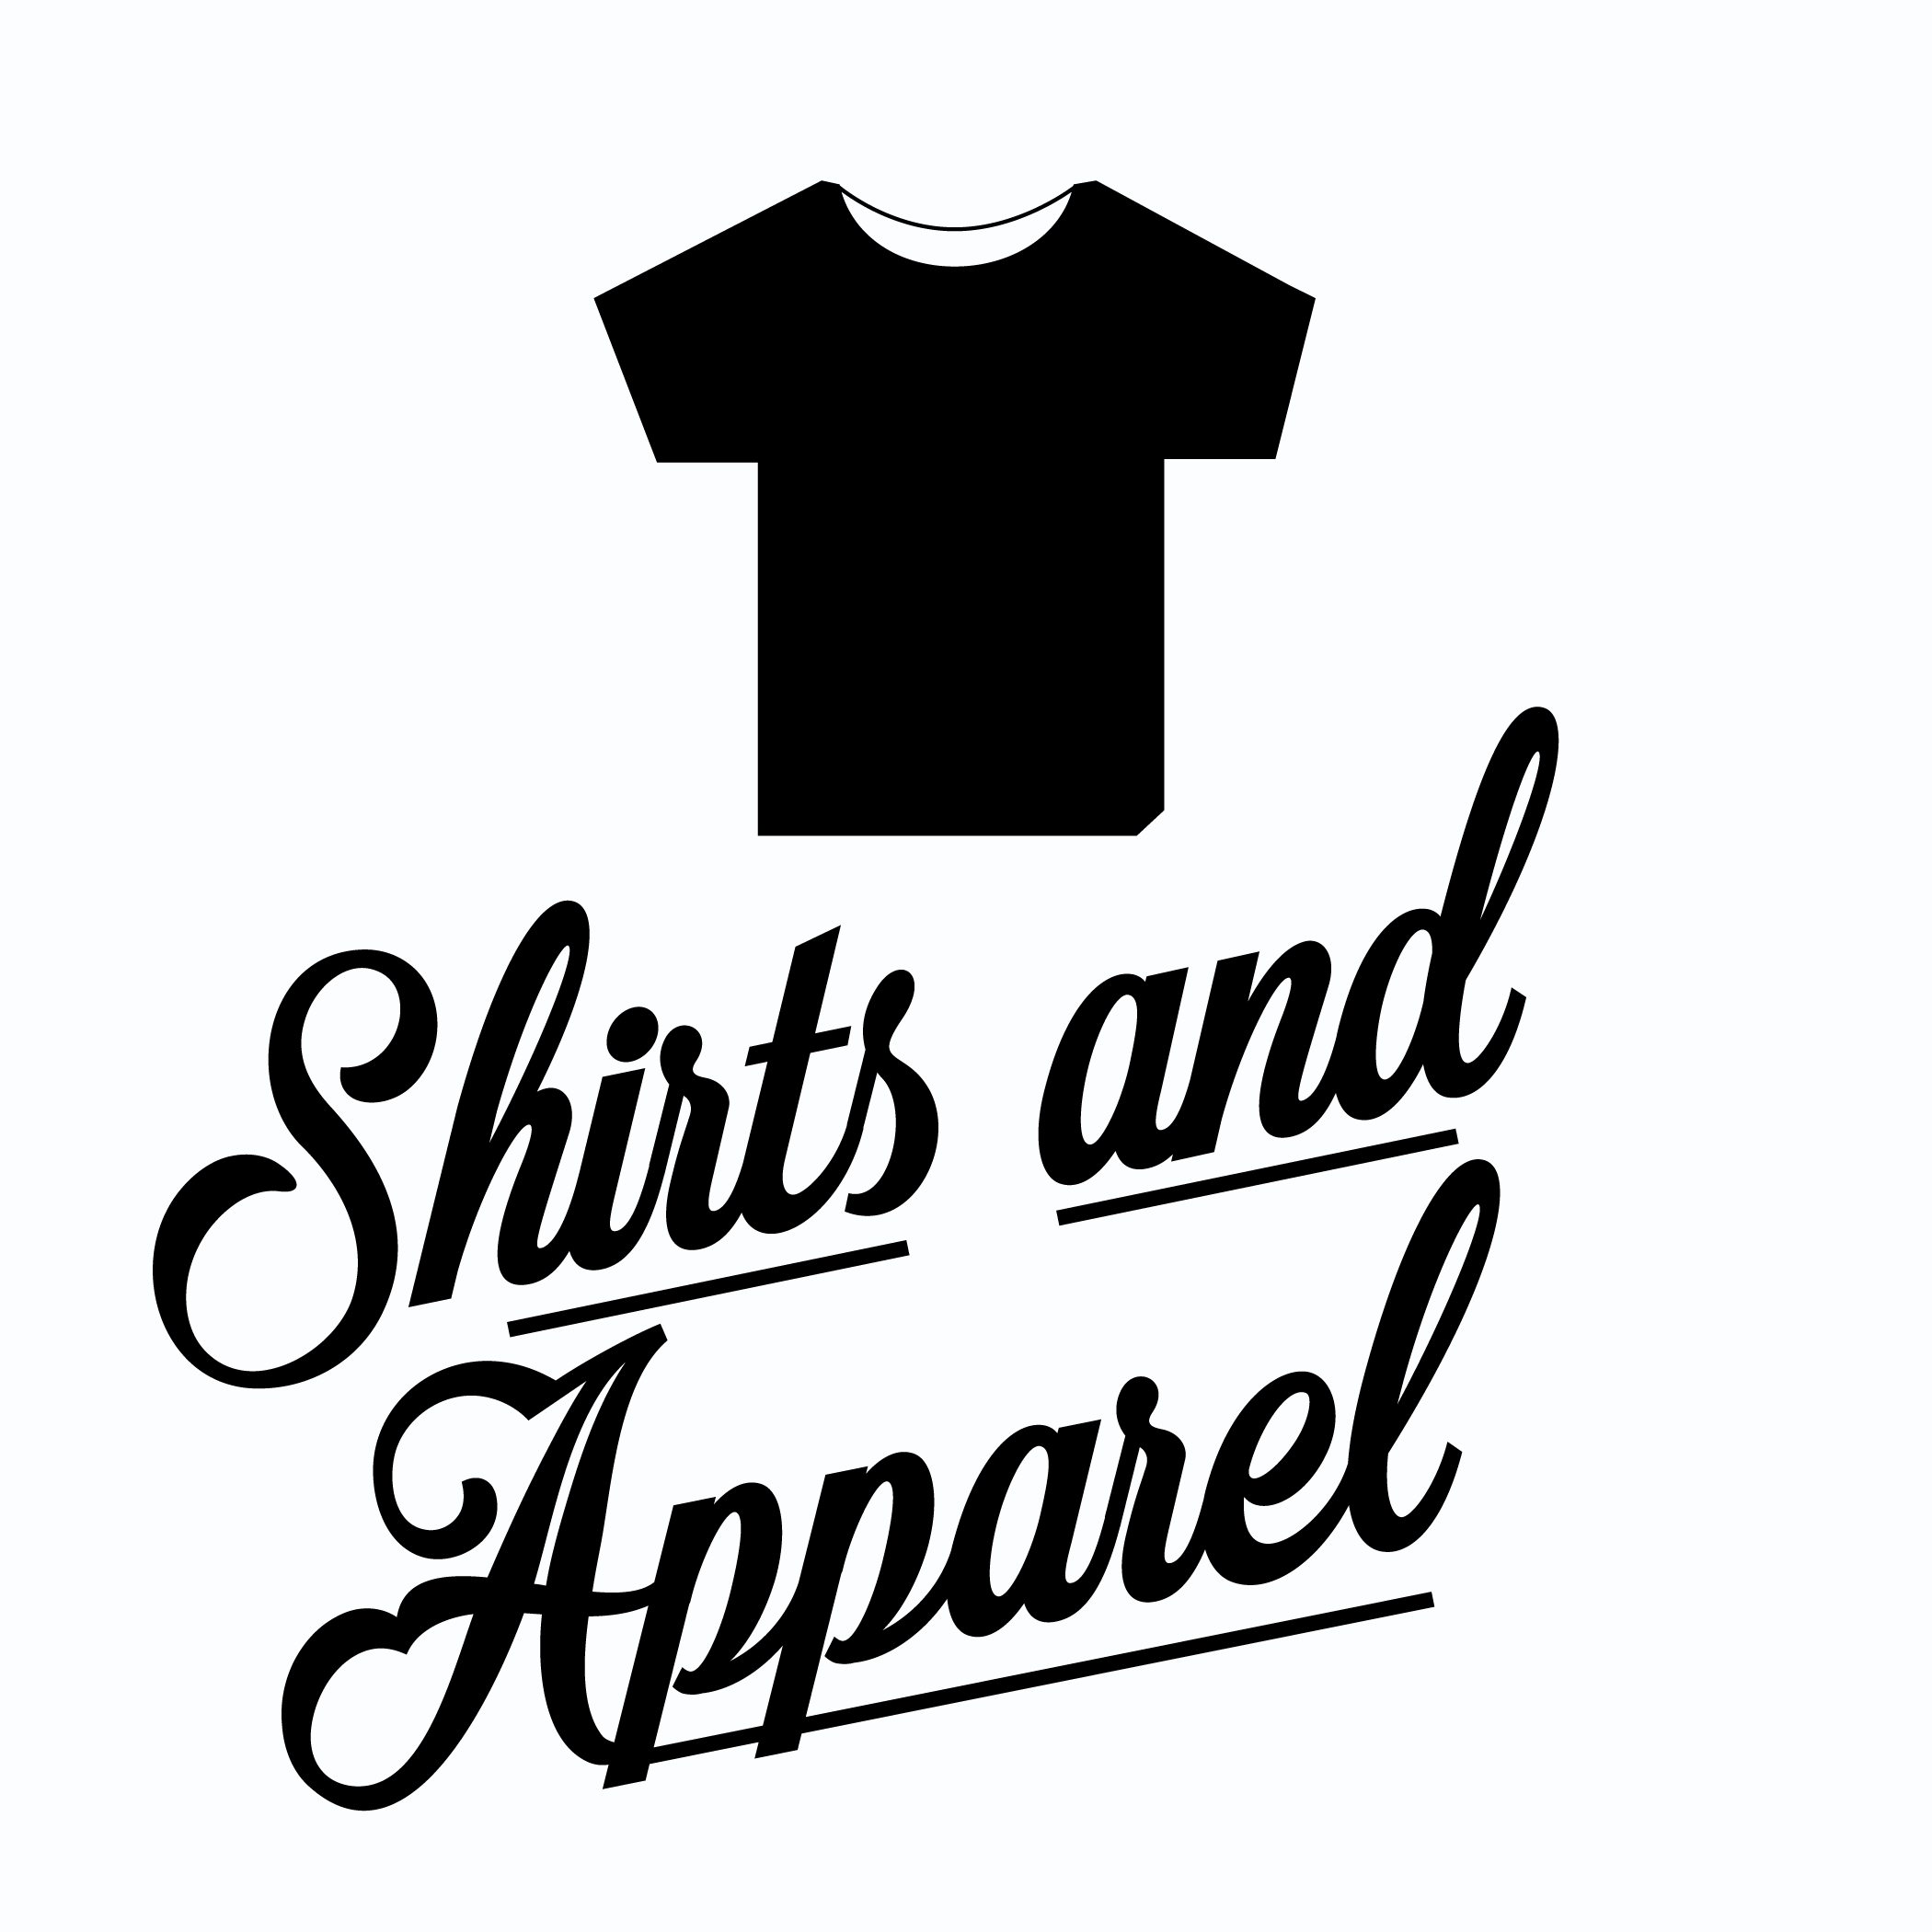 A t-shirt representing shirts and apparel.